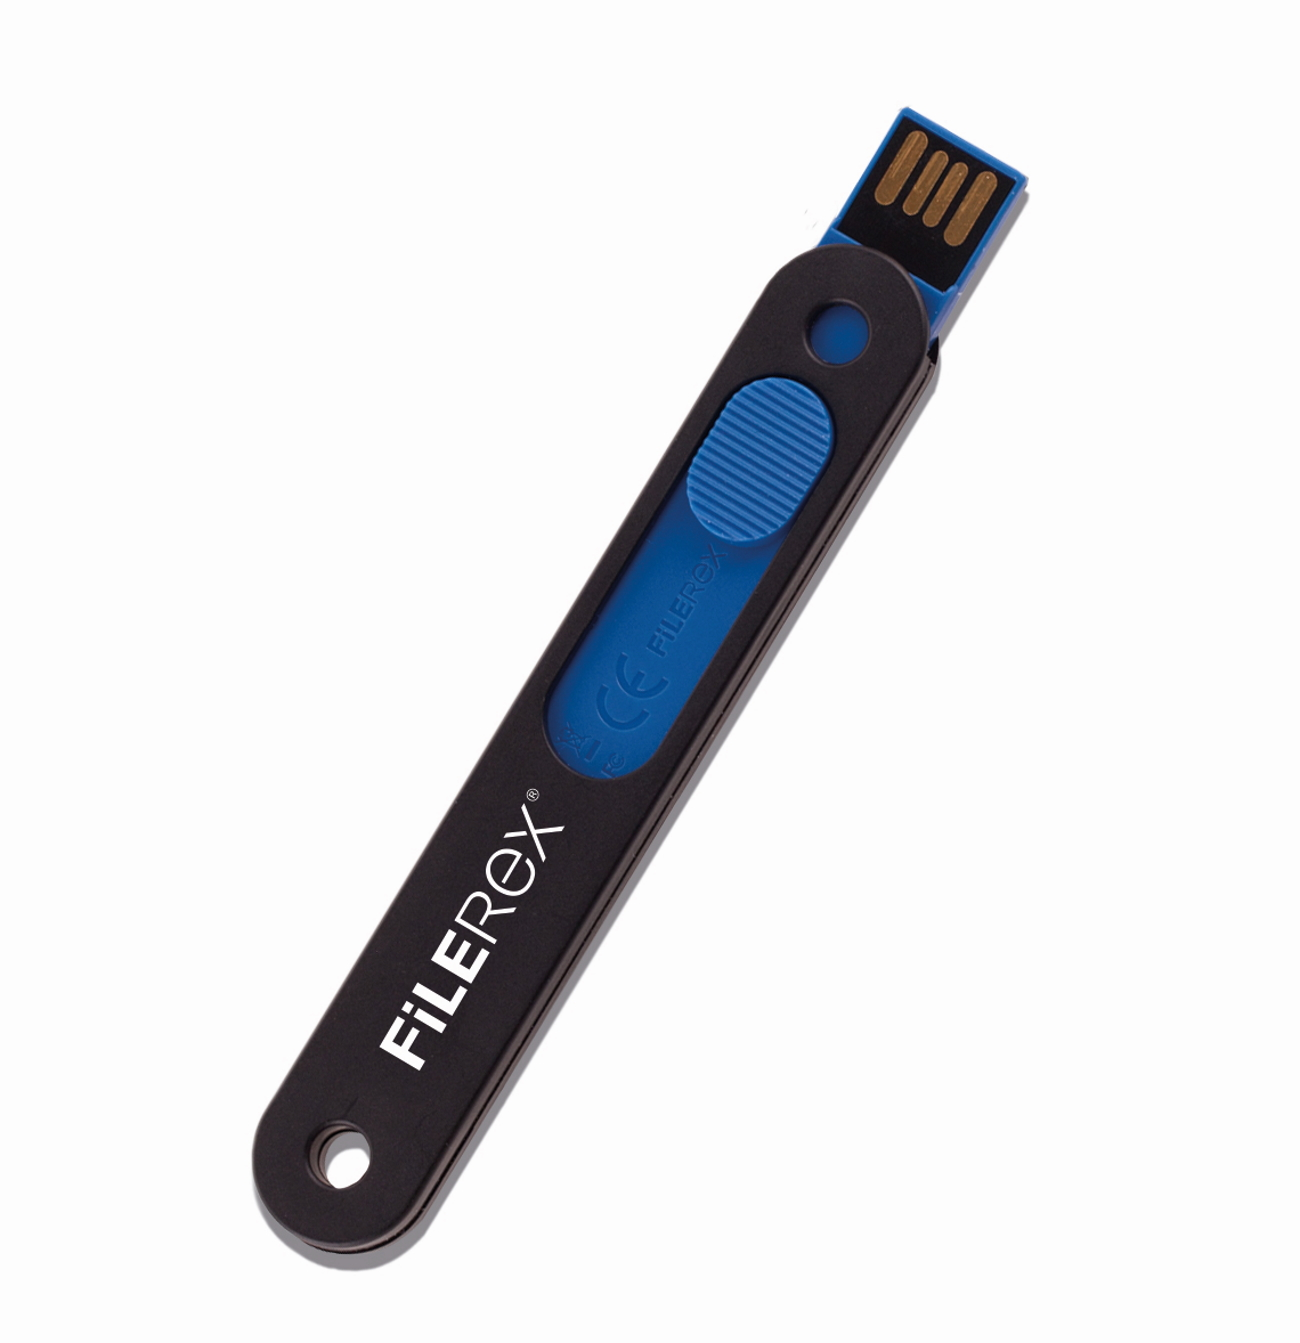 FILEREX FiLEREX / Sky Original - Blue, - 32GB BlackE USB-Stick GB) Blue) 2.0 (Sky #GEN2 32 (Black